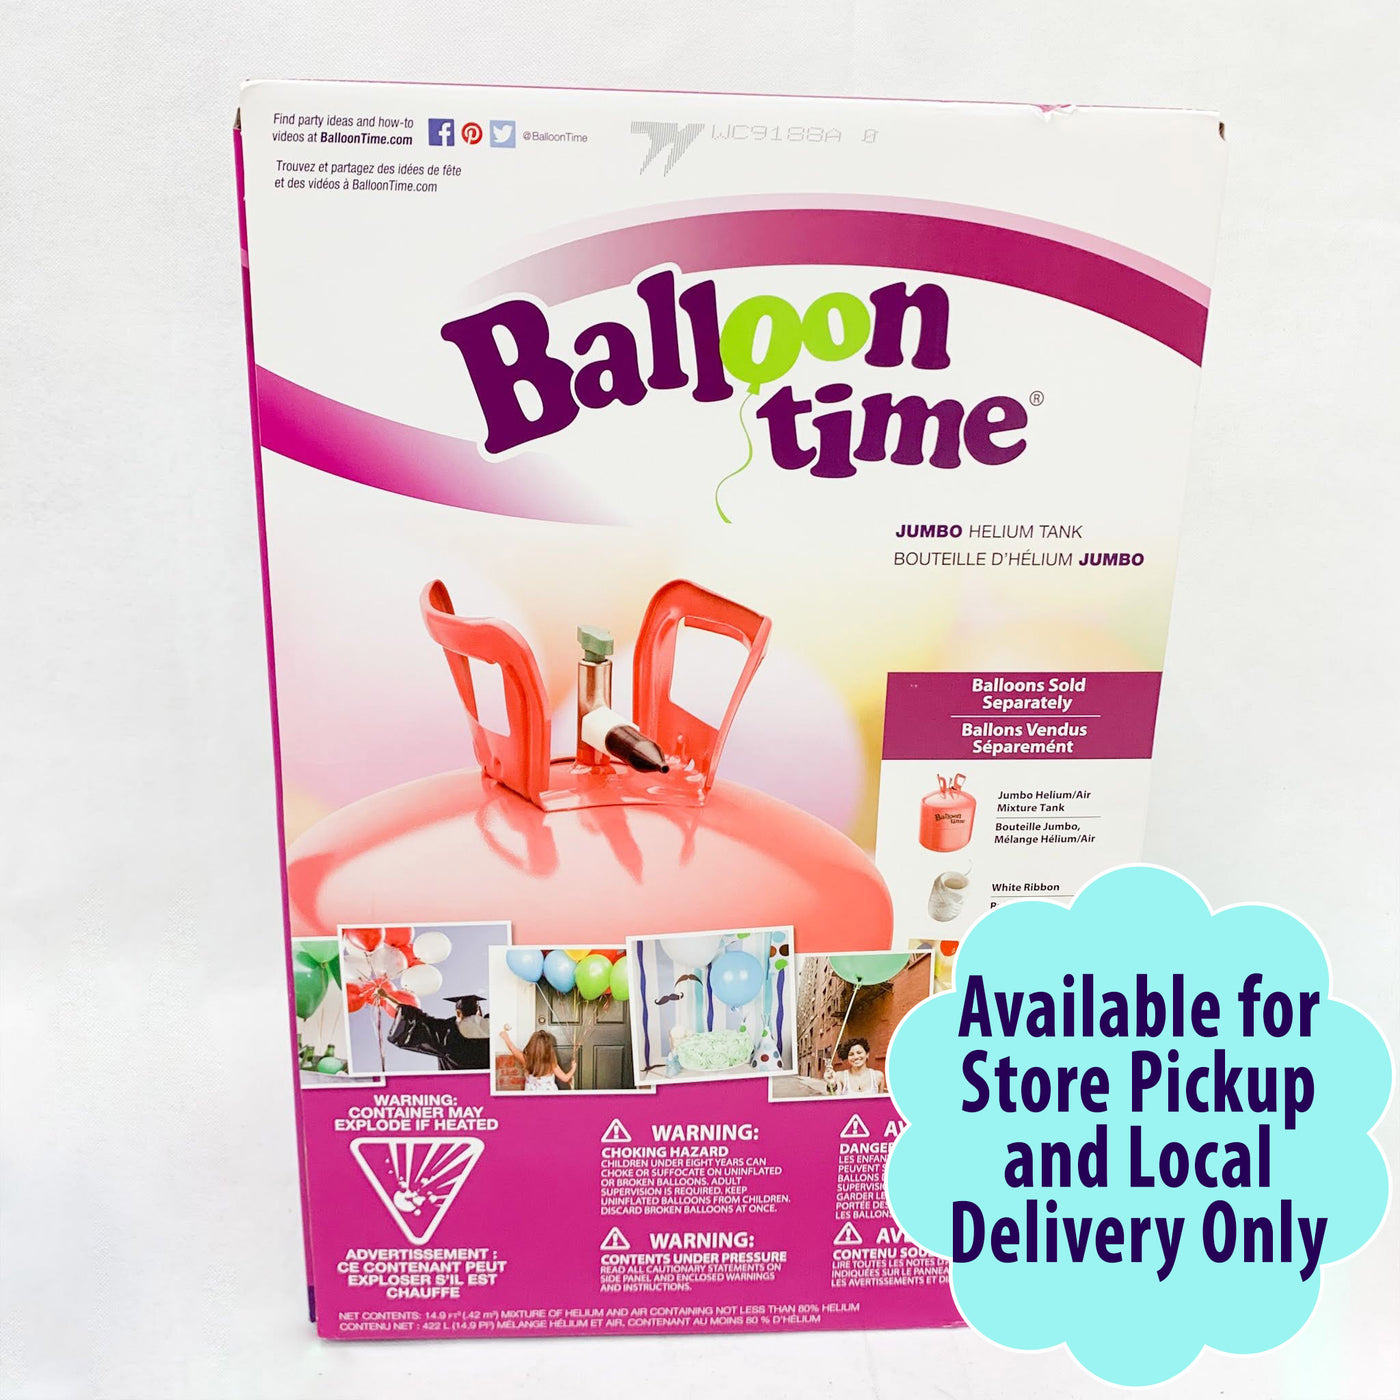 Balloon time (Helium Tank)